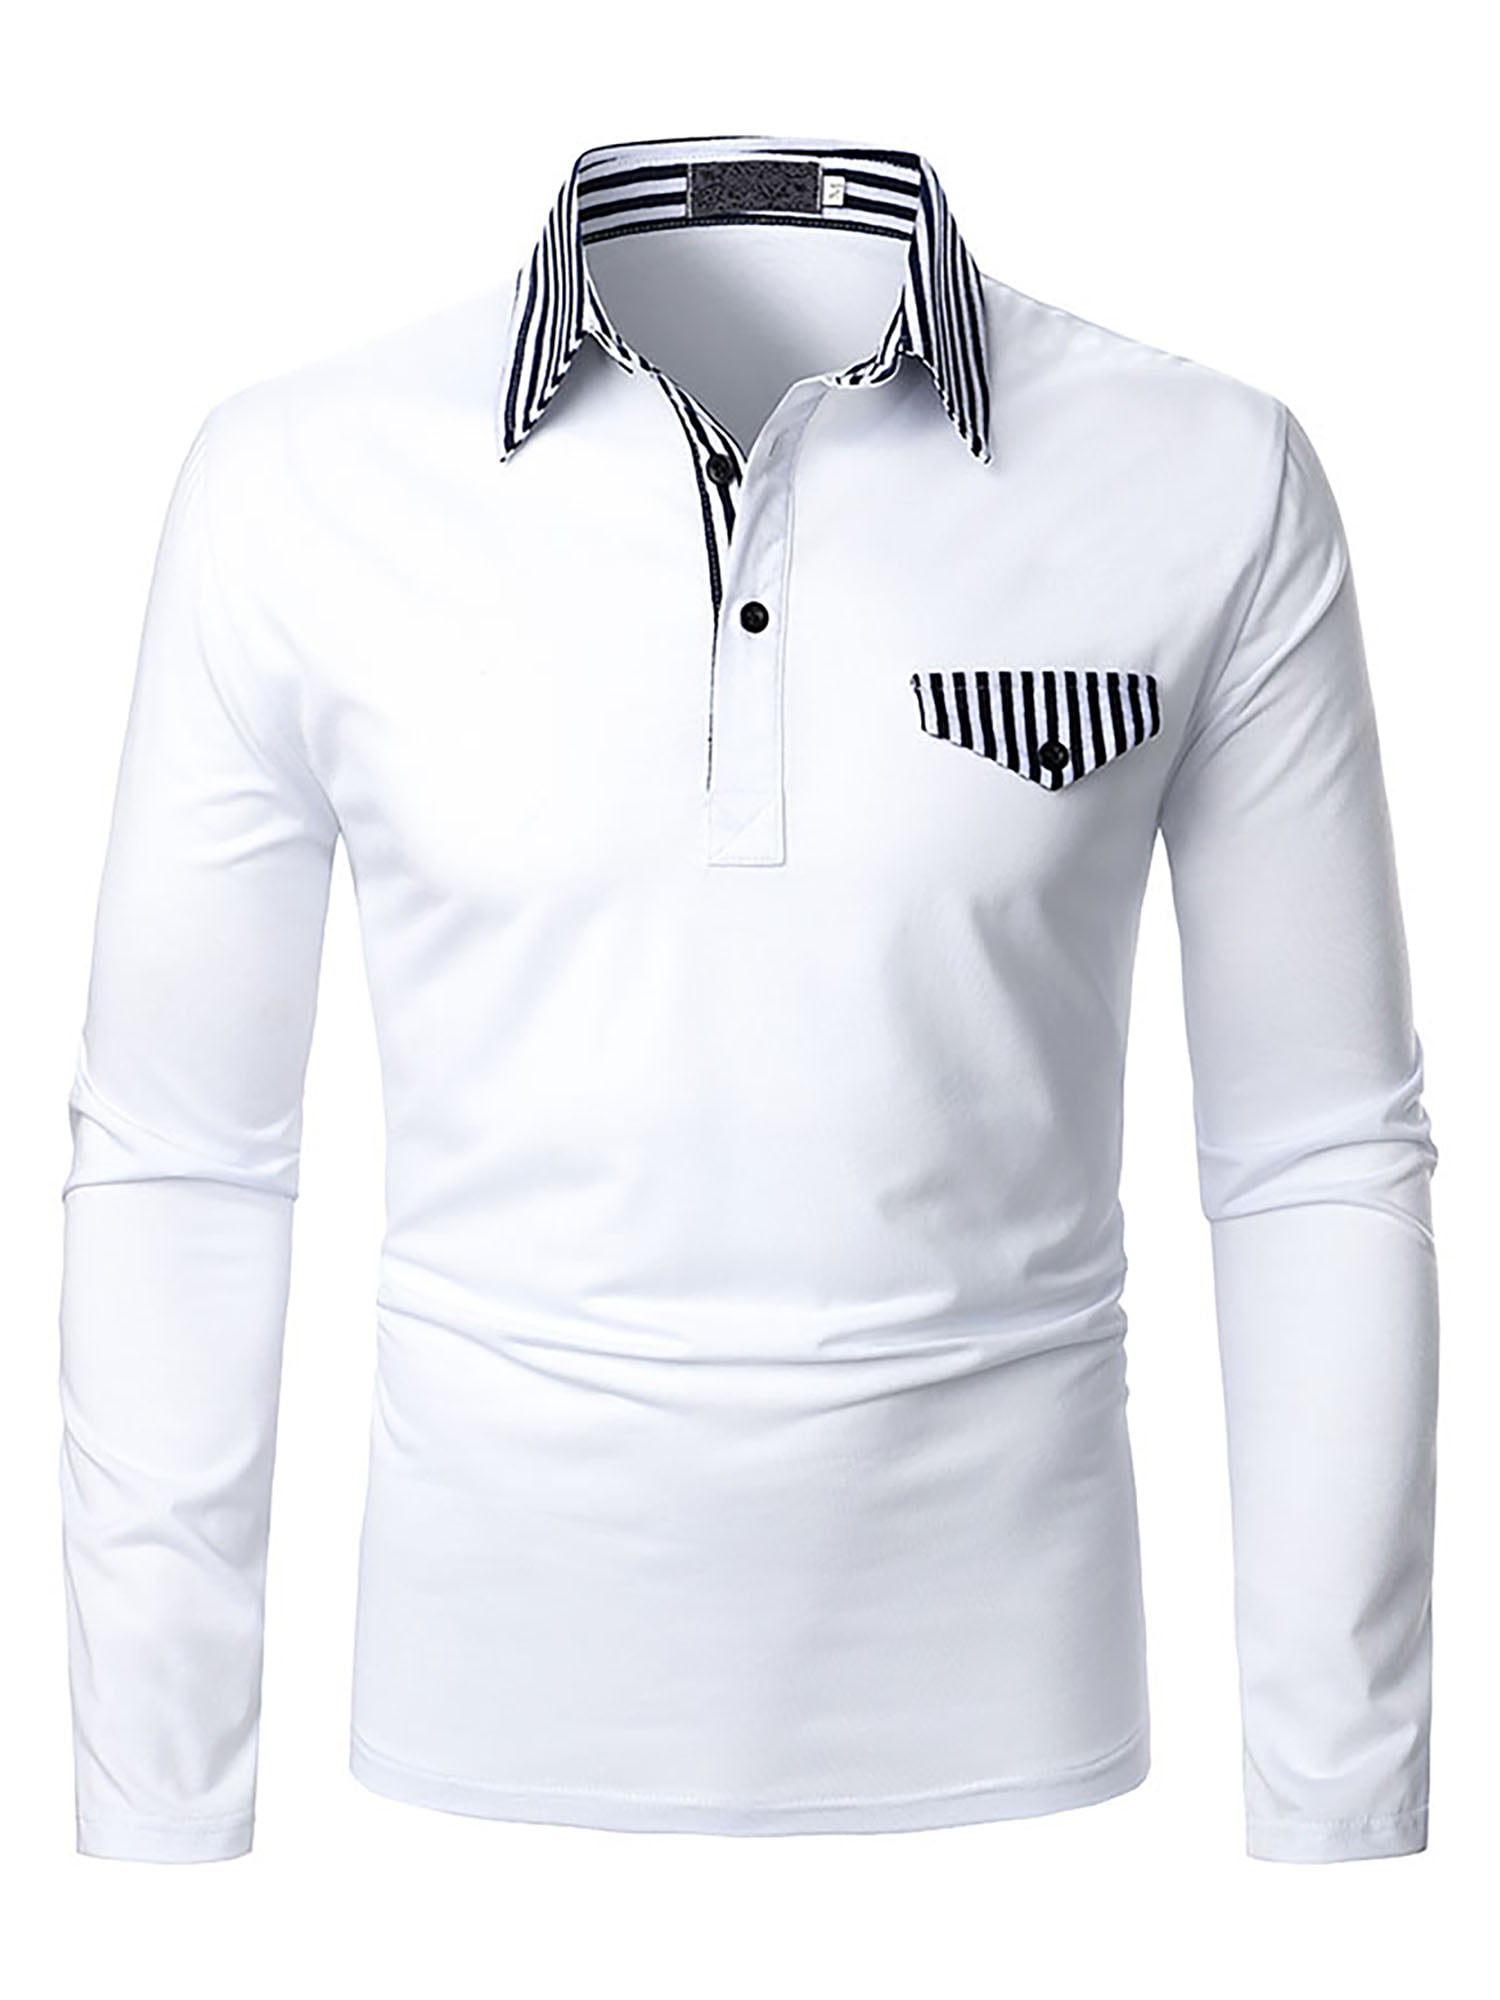 Mens Polo Shirt Short Sleeve Plain Classic Top Designer Style Fit T Shirt S-5XL 